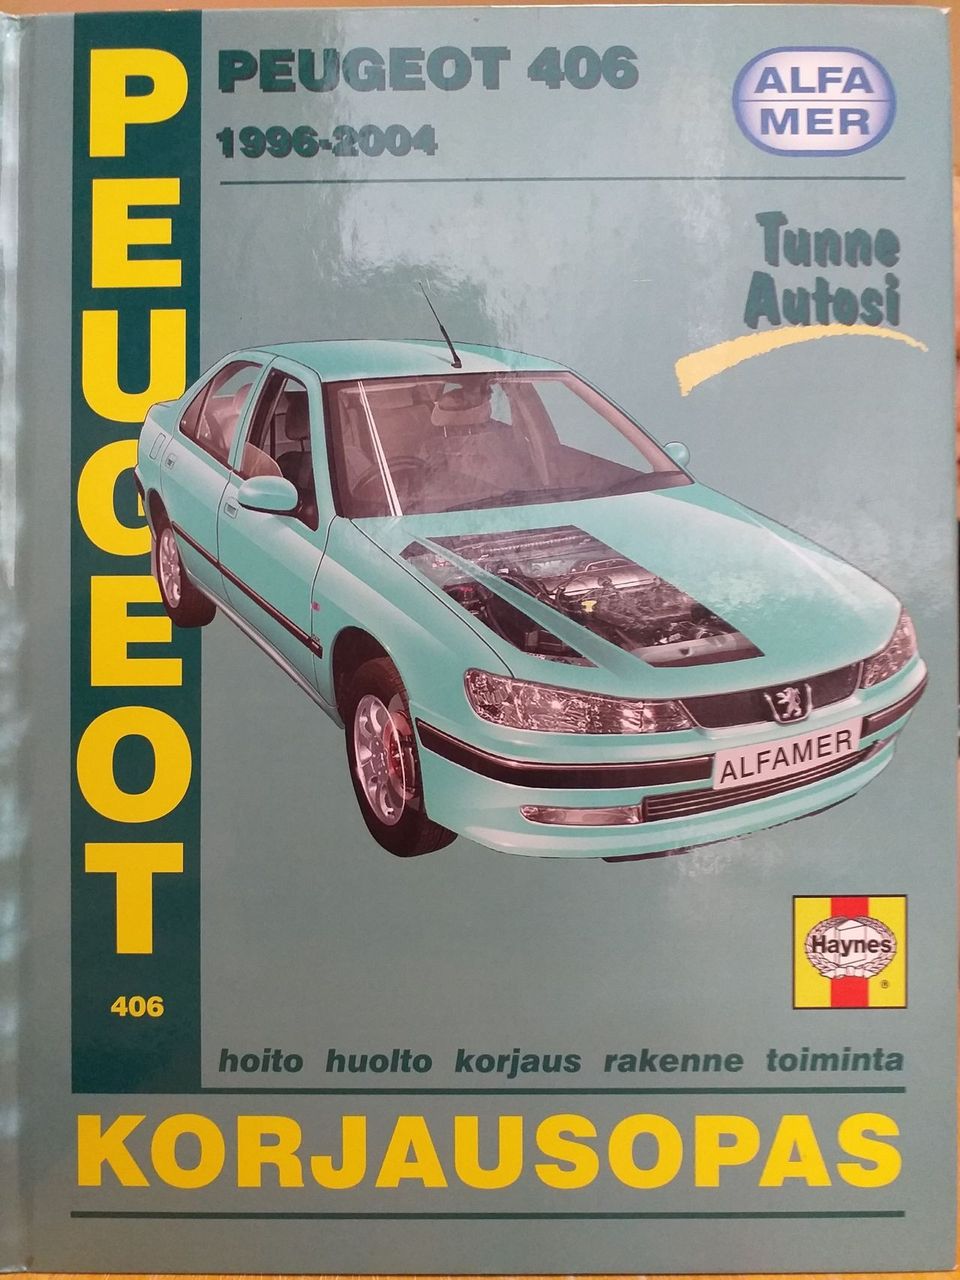 Peugeot 406 korjausopas